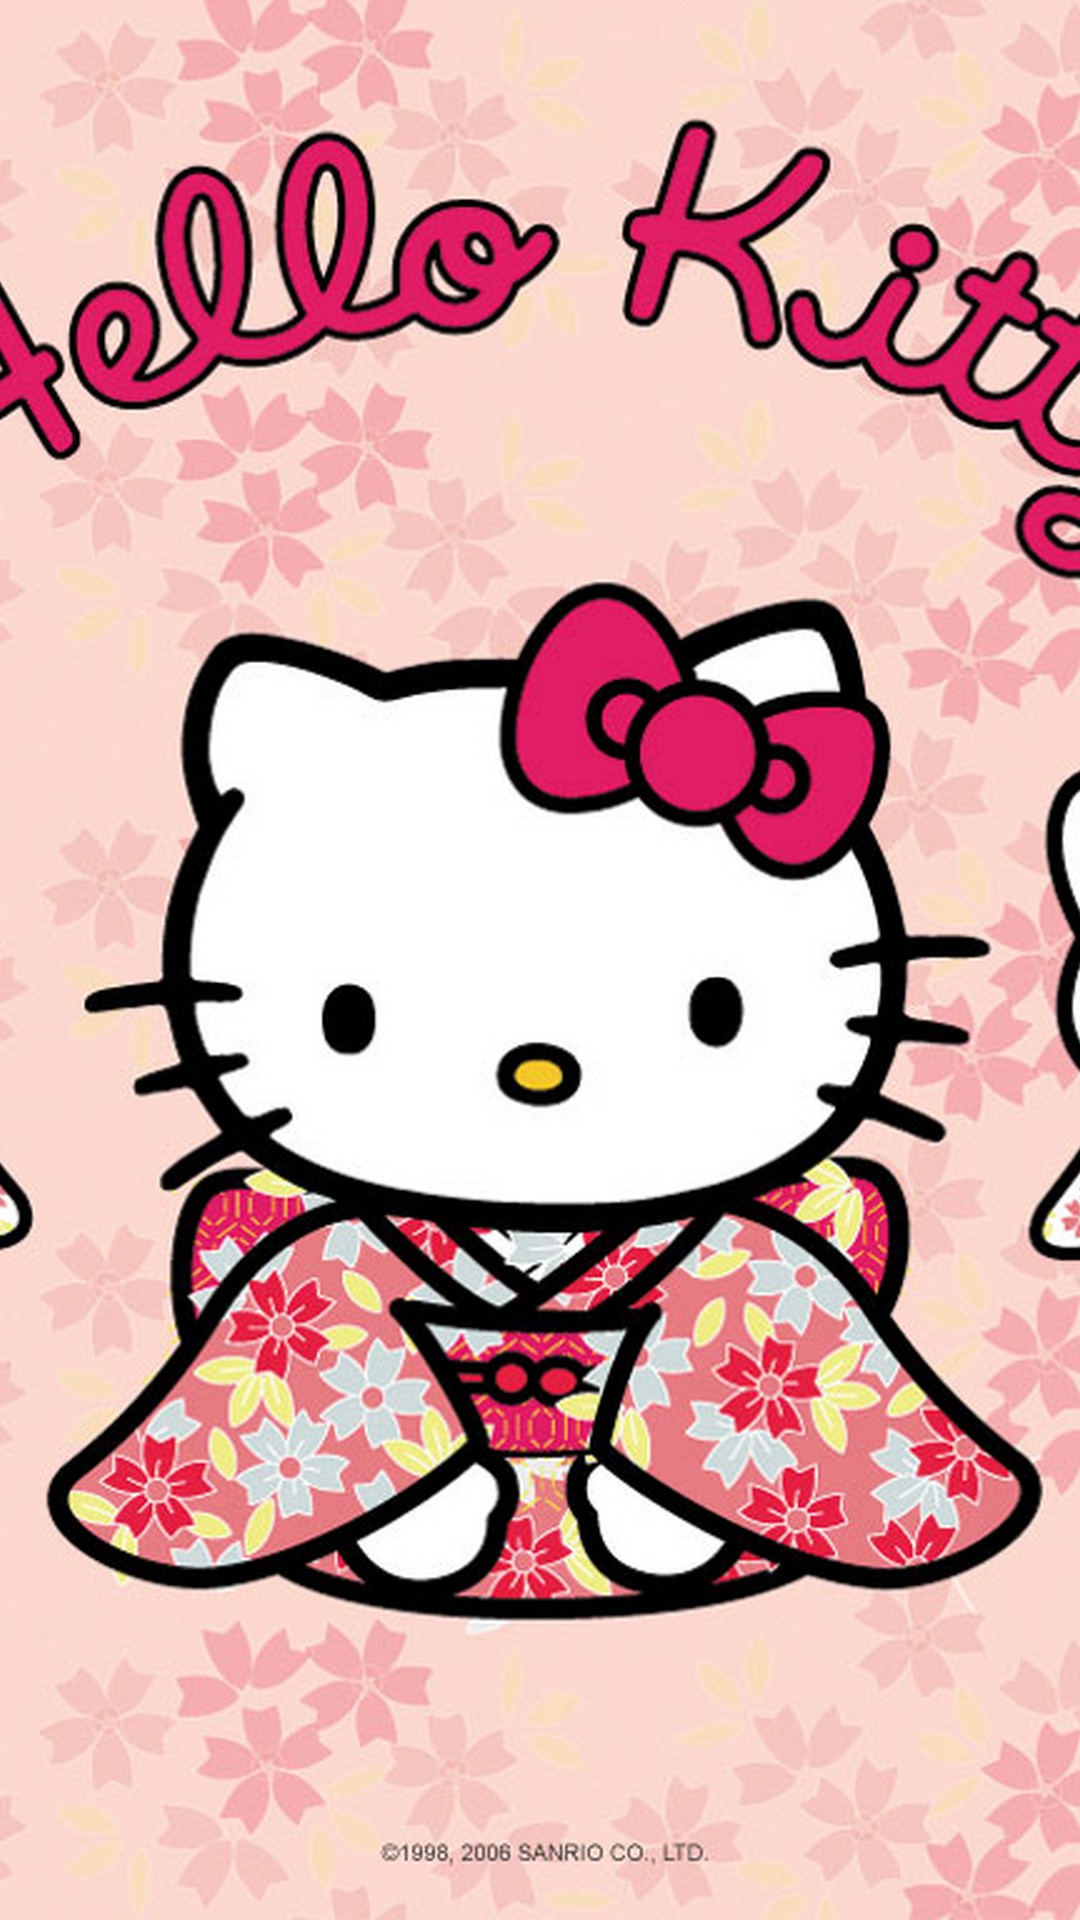 Wallpaper Iphone Hello Kitty Characters With Image - Kimono Hello Kitty Japan - HD Wallpaper 